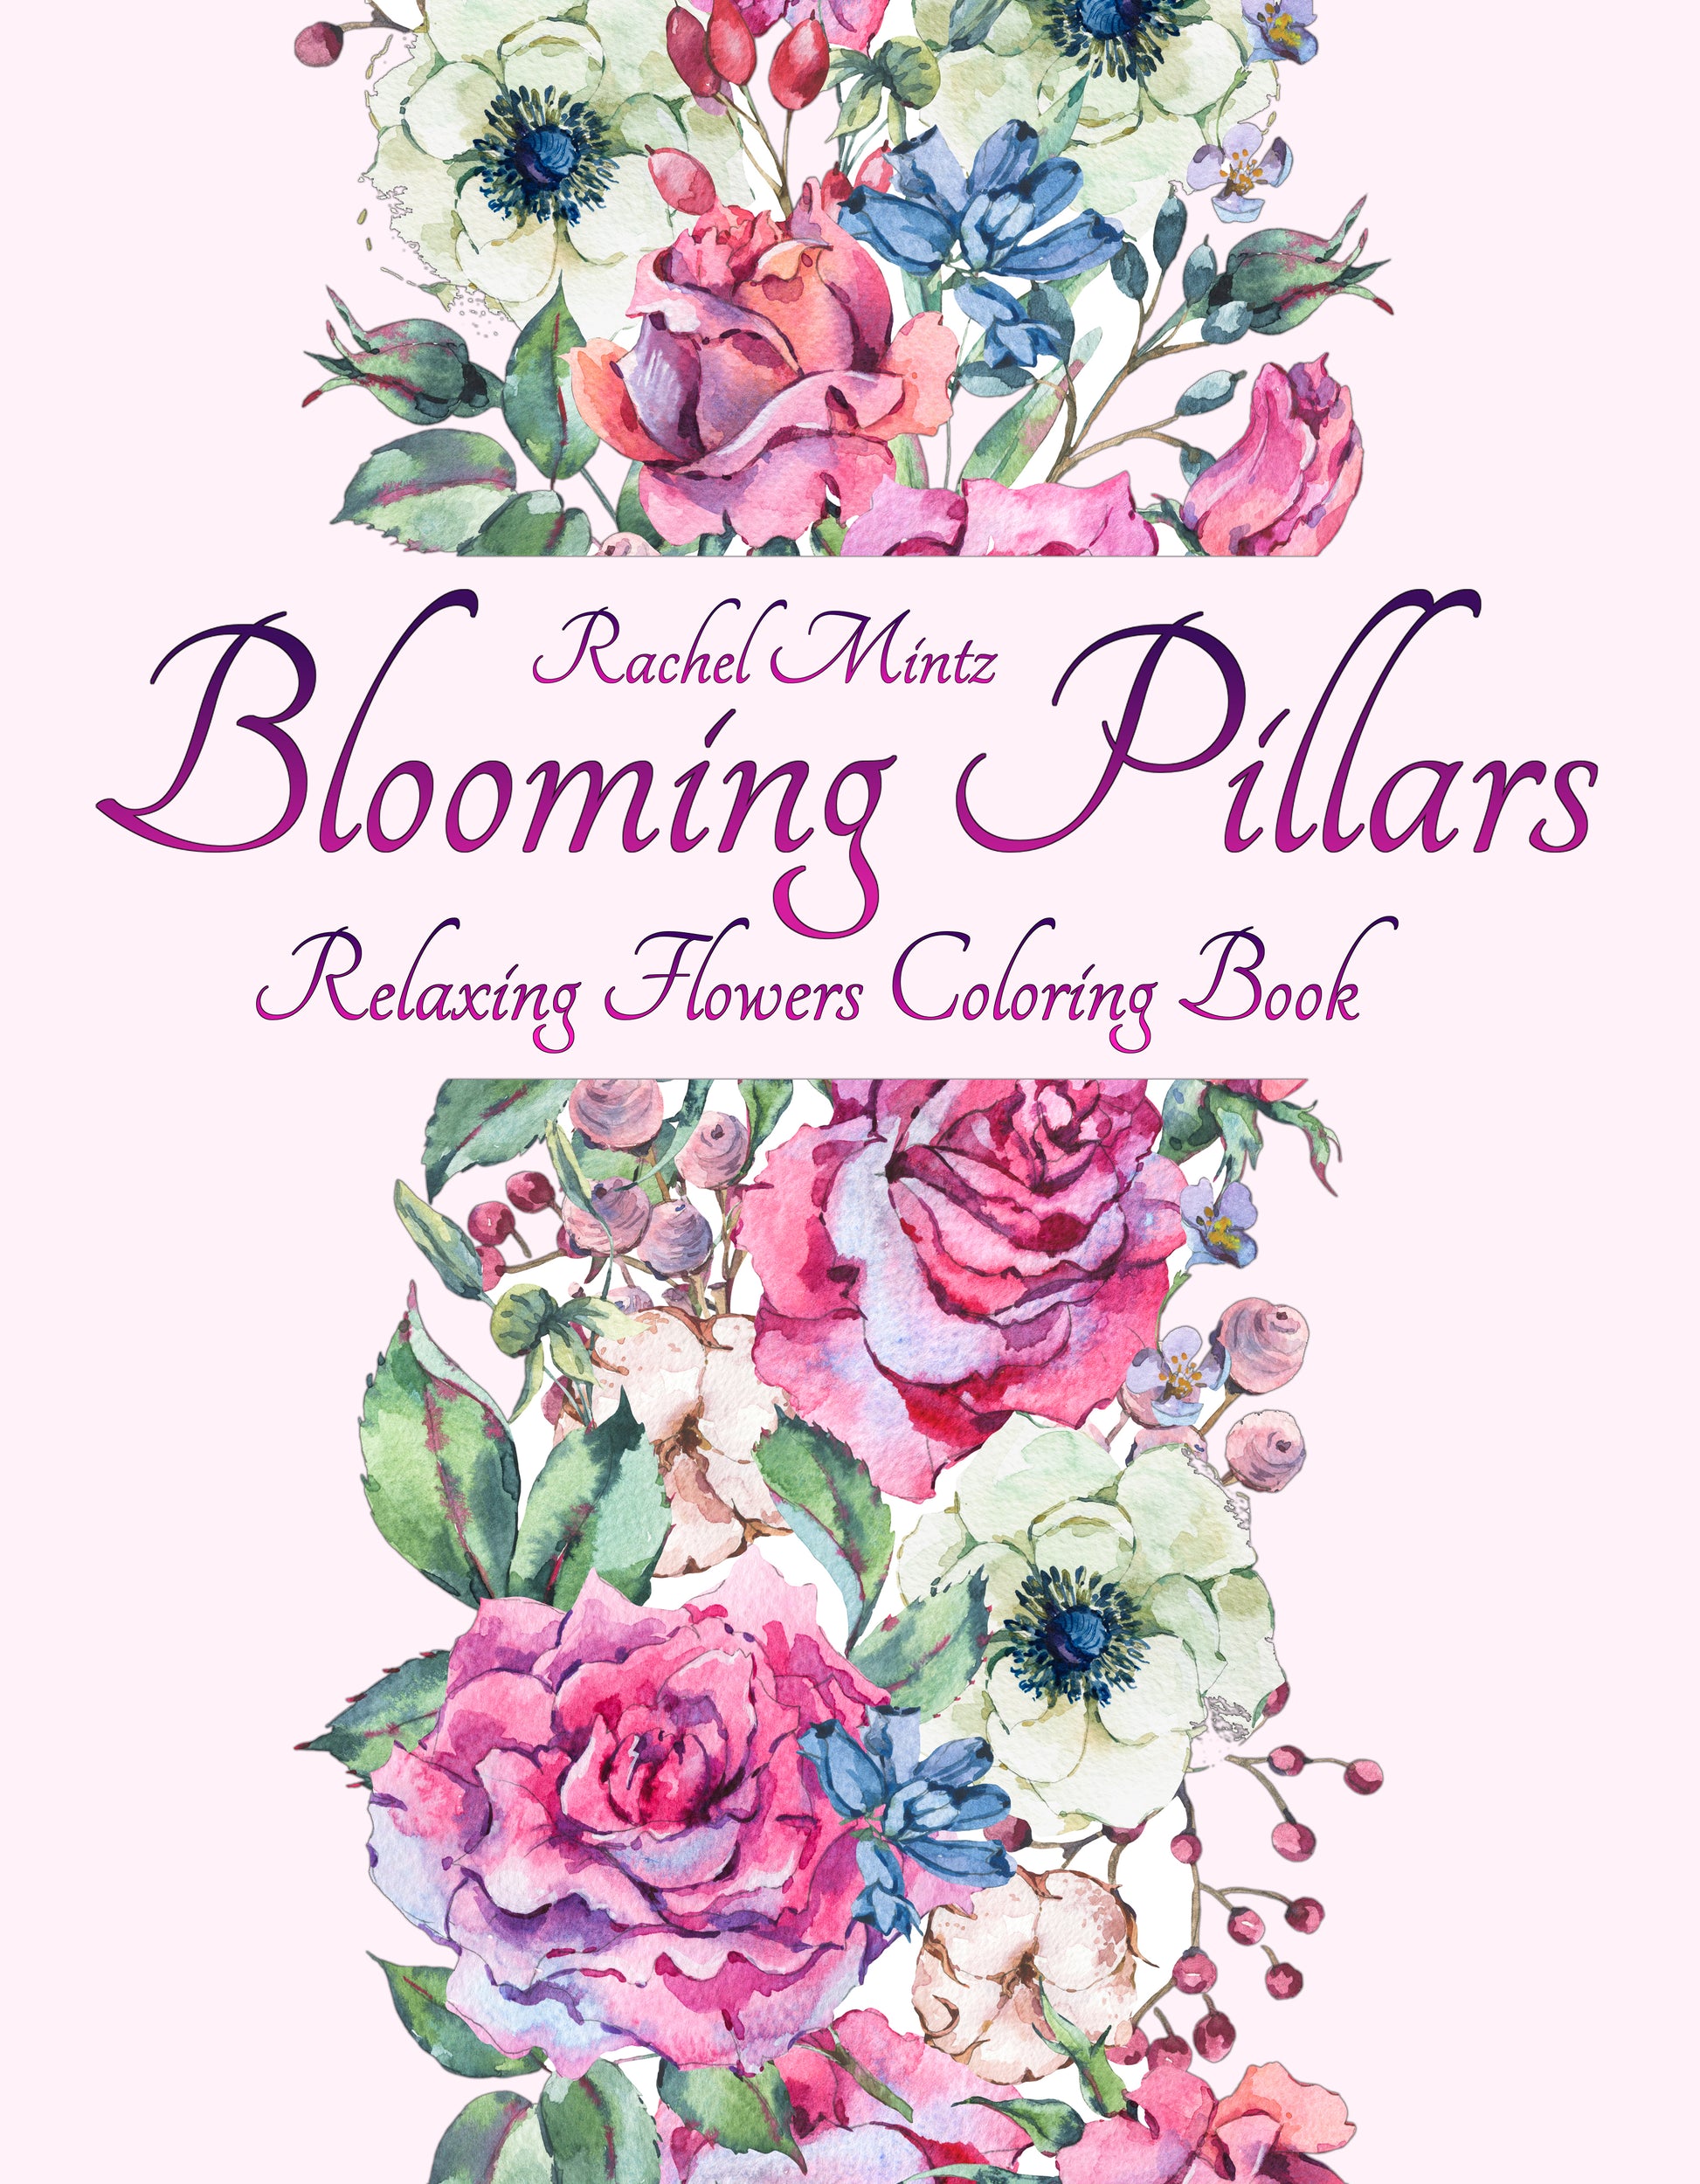 Blooming Pillars - Relaxing Flowers Coloring Book 